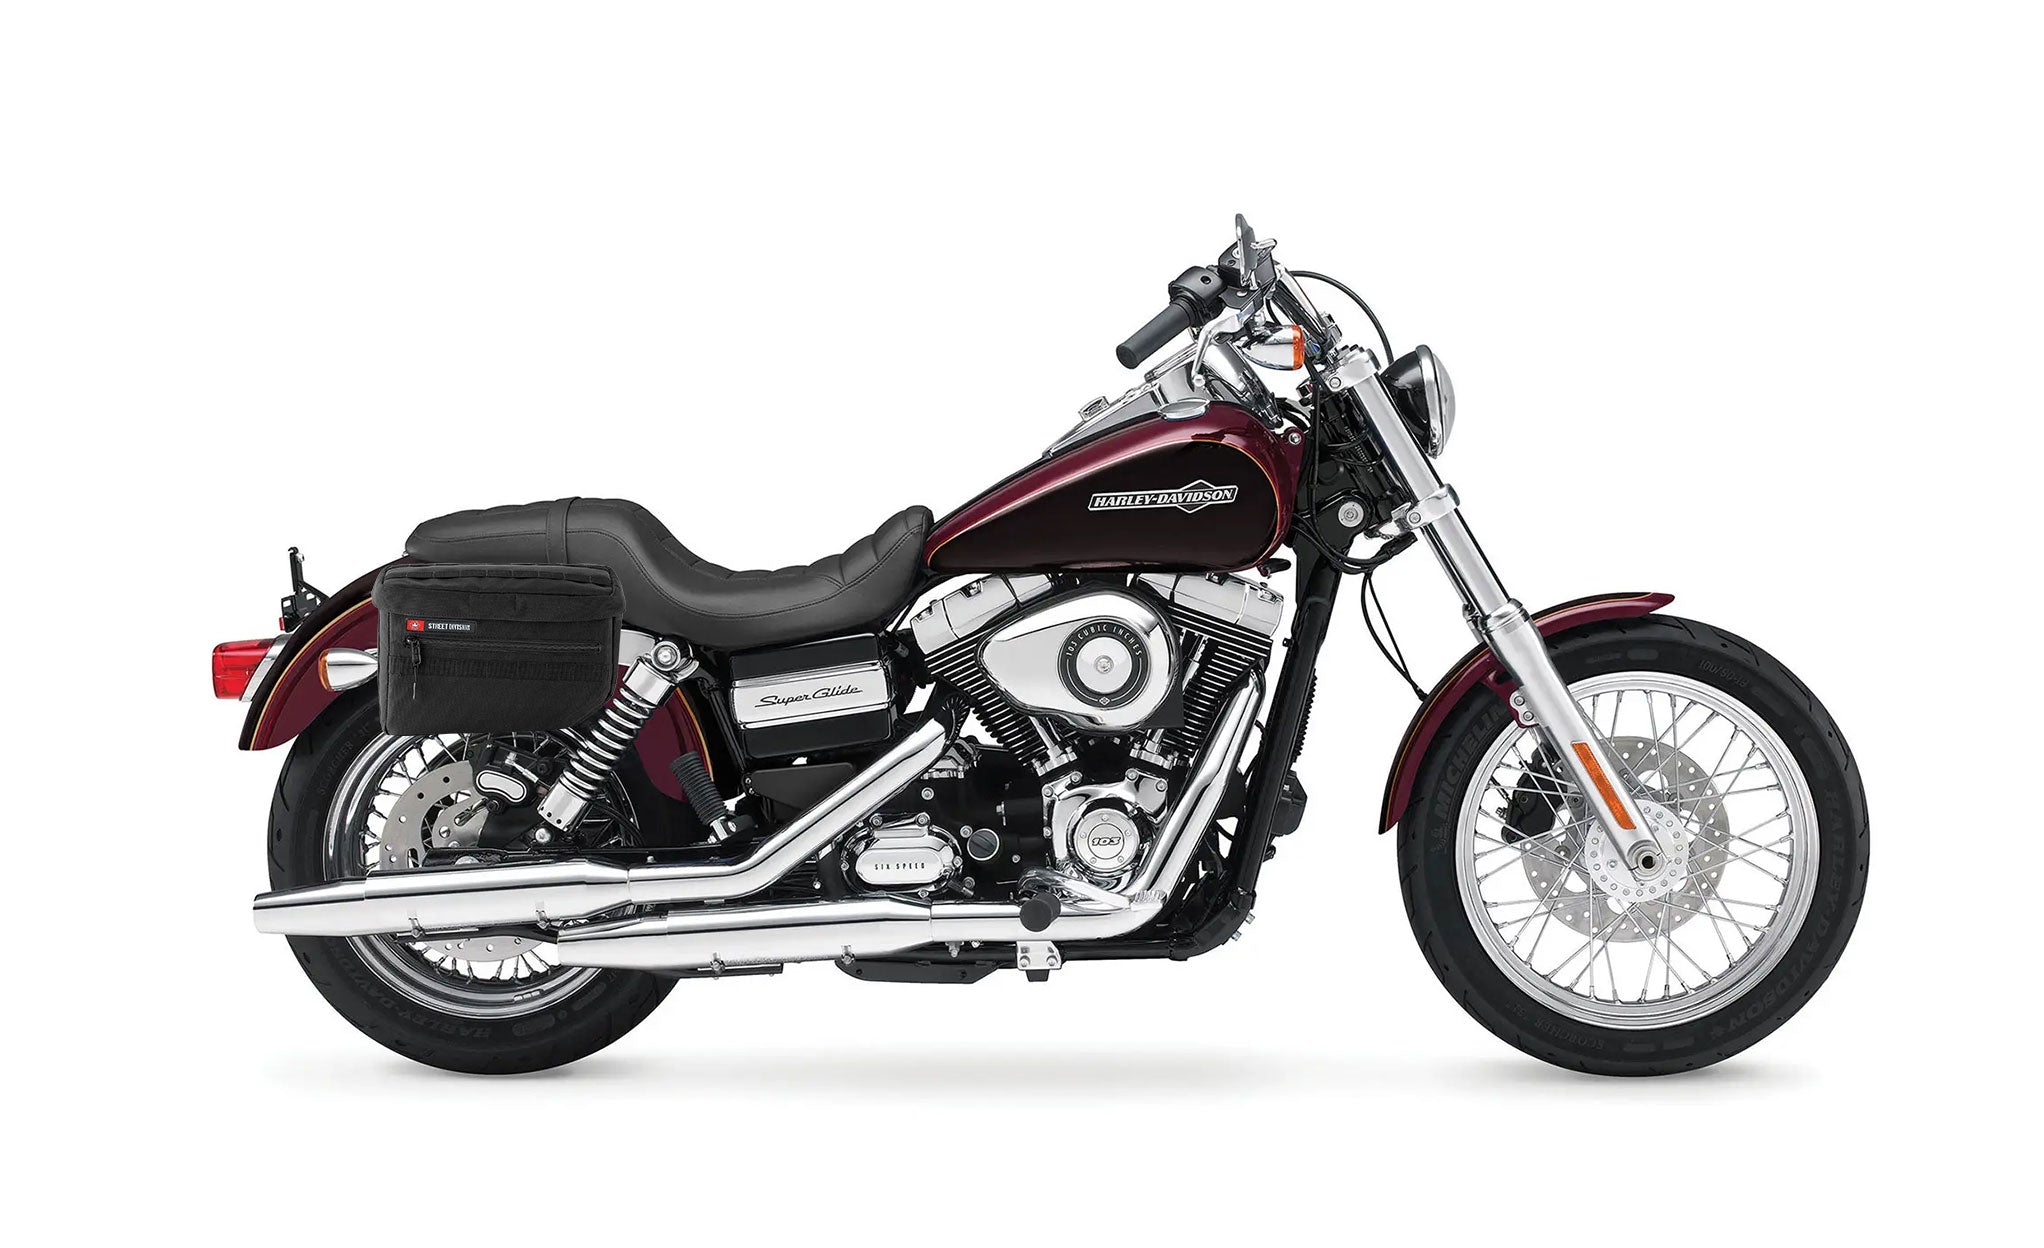 27L - Patriot Large Throw Over Saddlebags for Harley Dyna Super Glide Custom FXDC/I on Bike Photo @expand